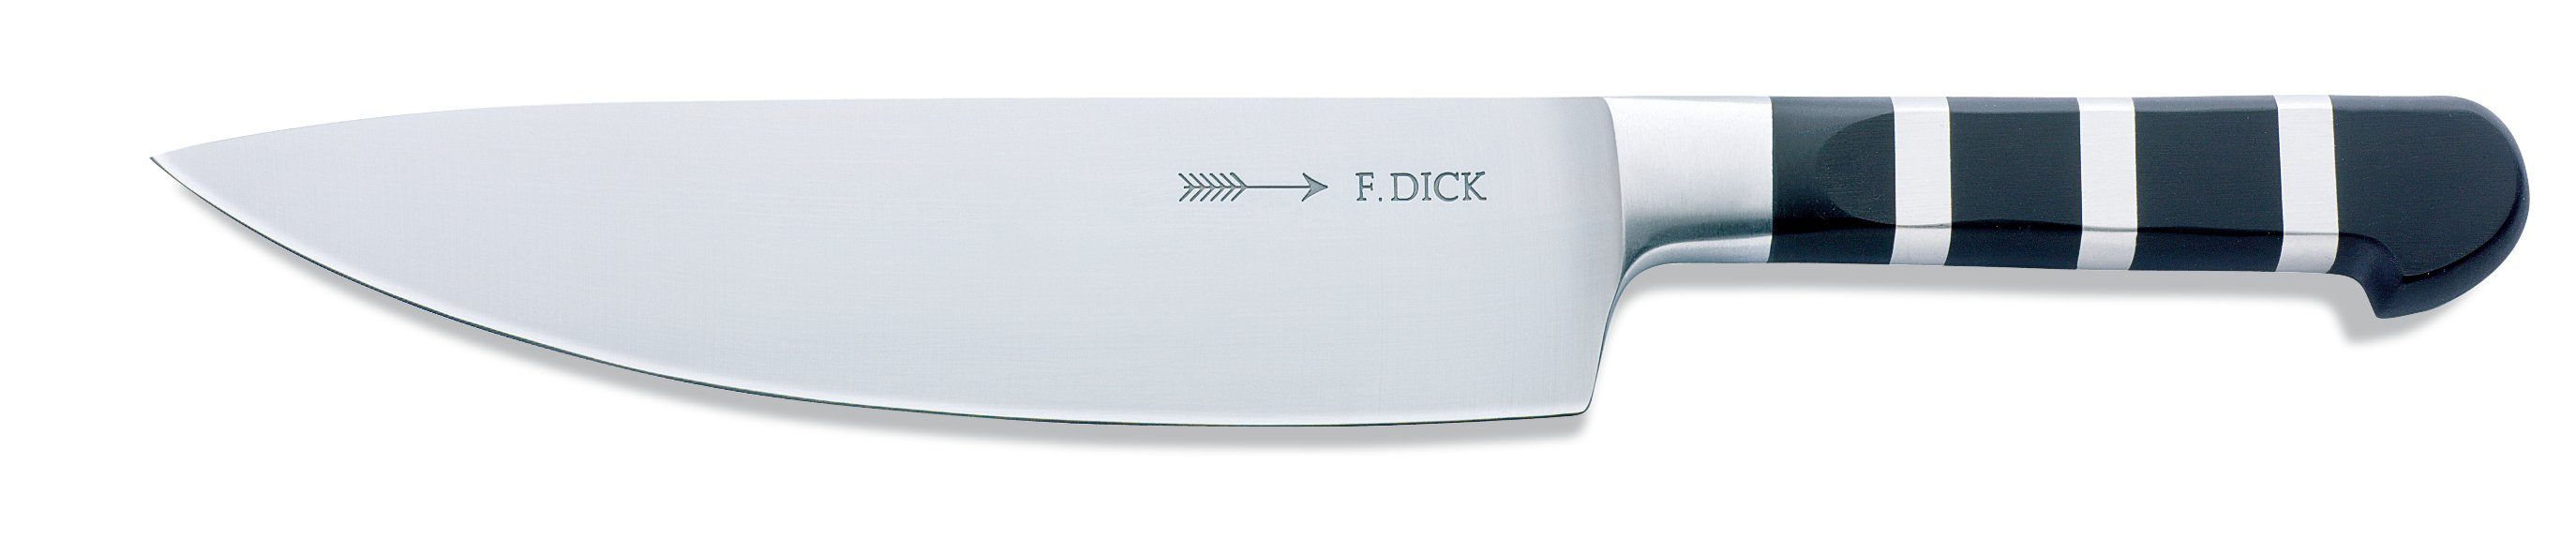 DICK F. mit Dick 1905 Messer-Set + Santoku Küchenmesser Messerblock Schere Kochmesser